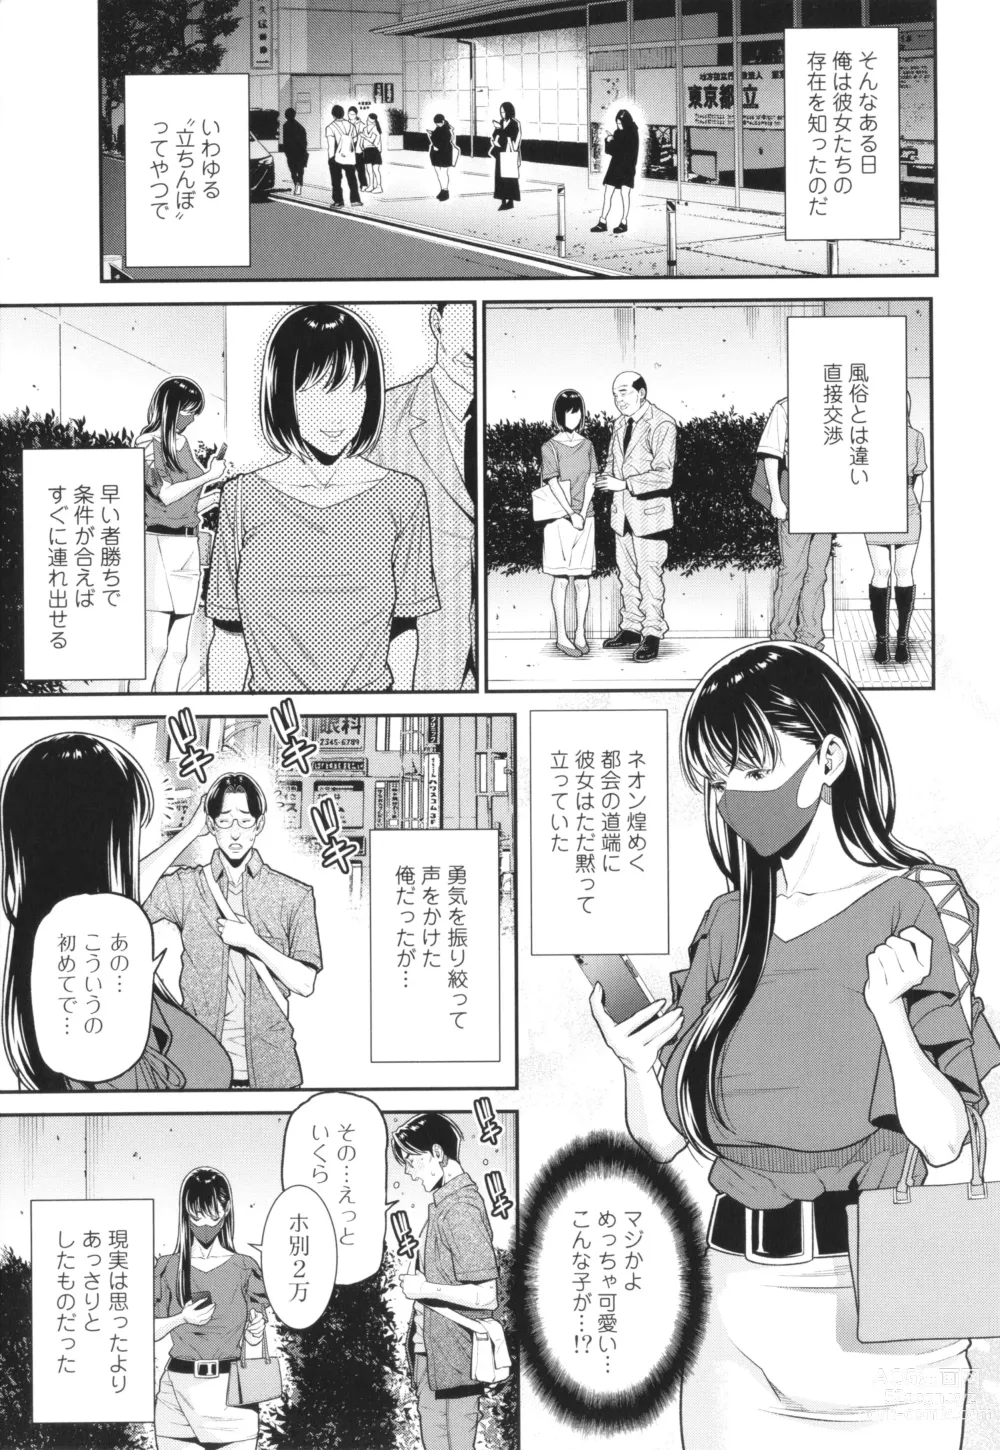 Page 158 of manga Onna ni Kagi wa Kakerarenai